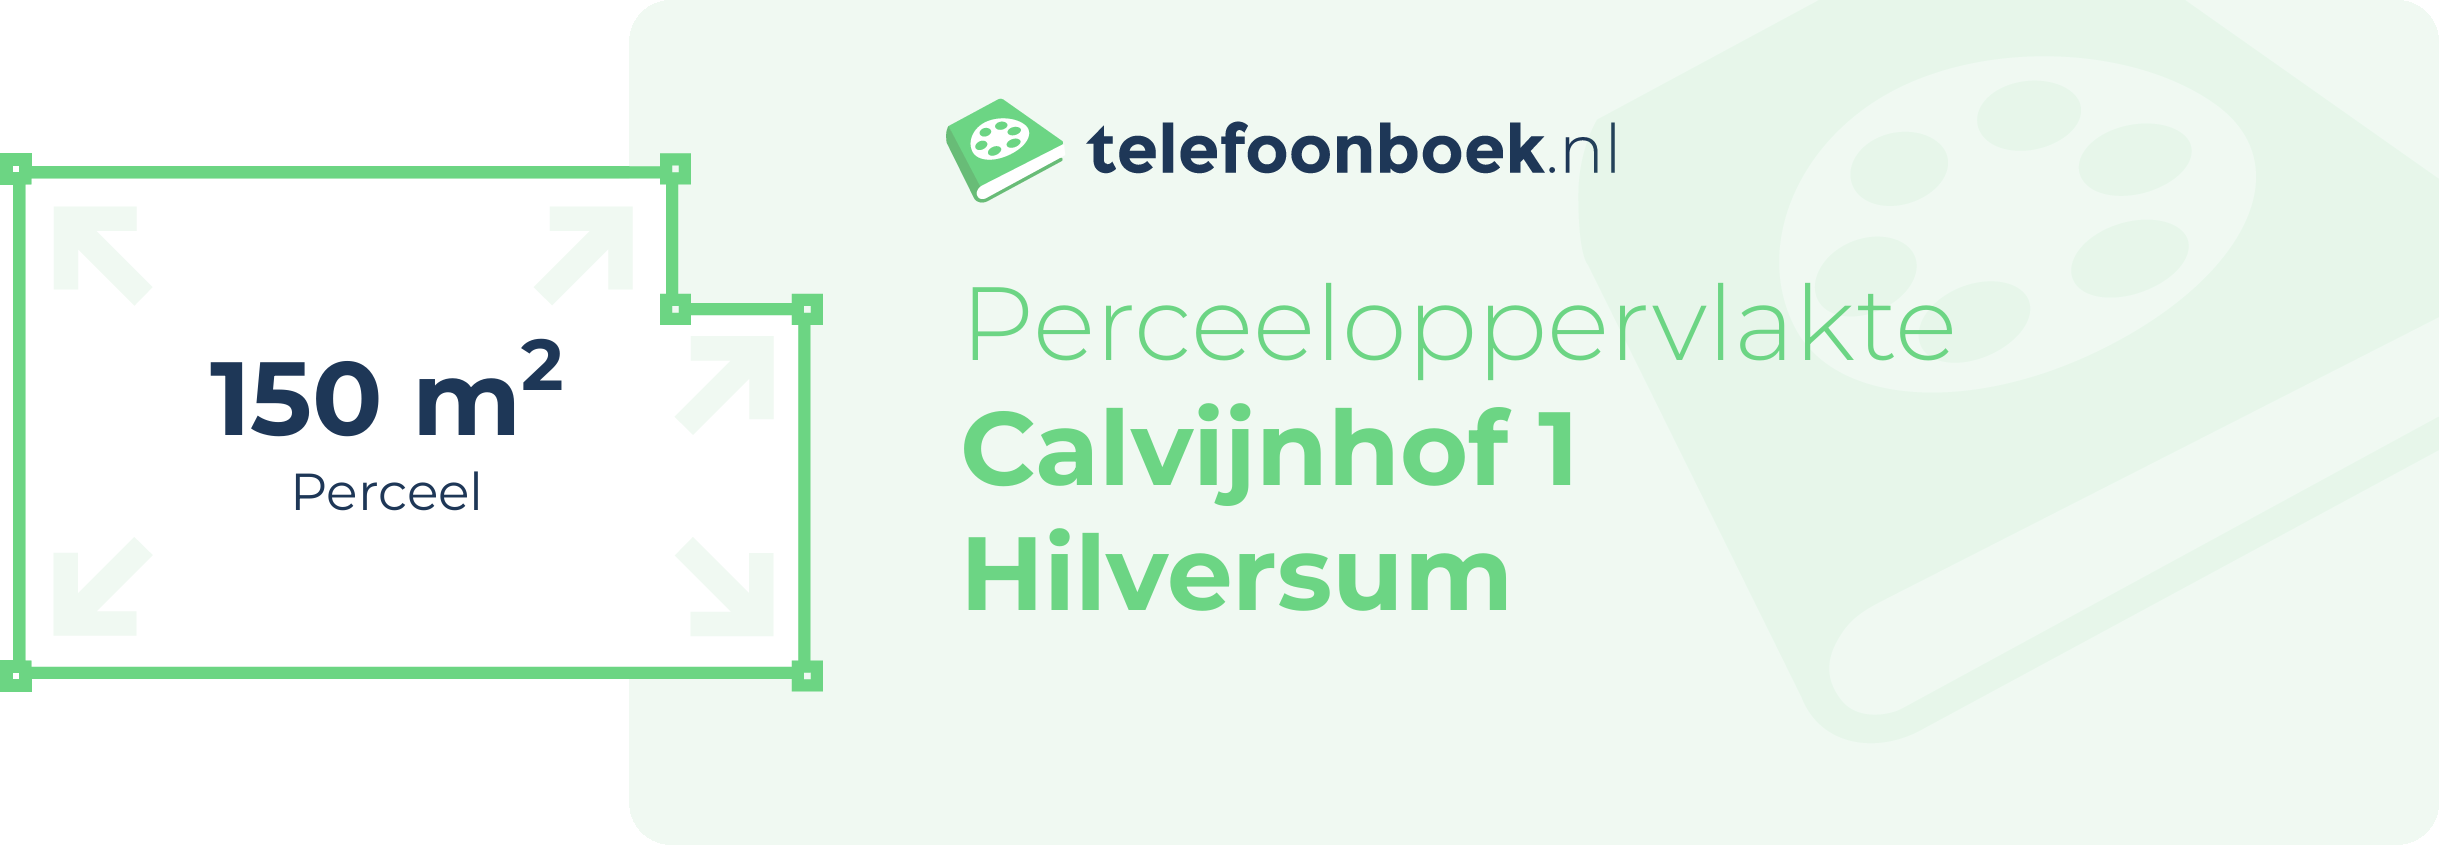 Perceeloppervlakte Calvijnhof 1 Hilversum